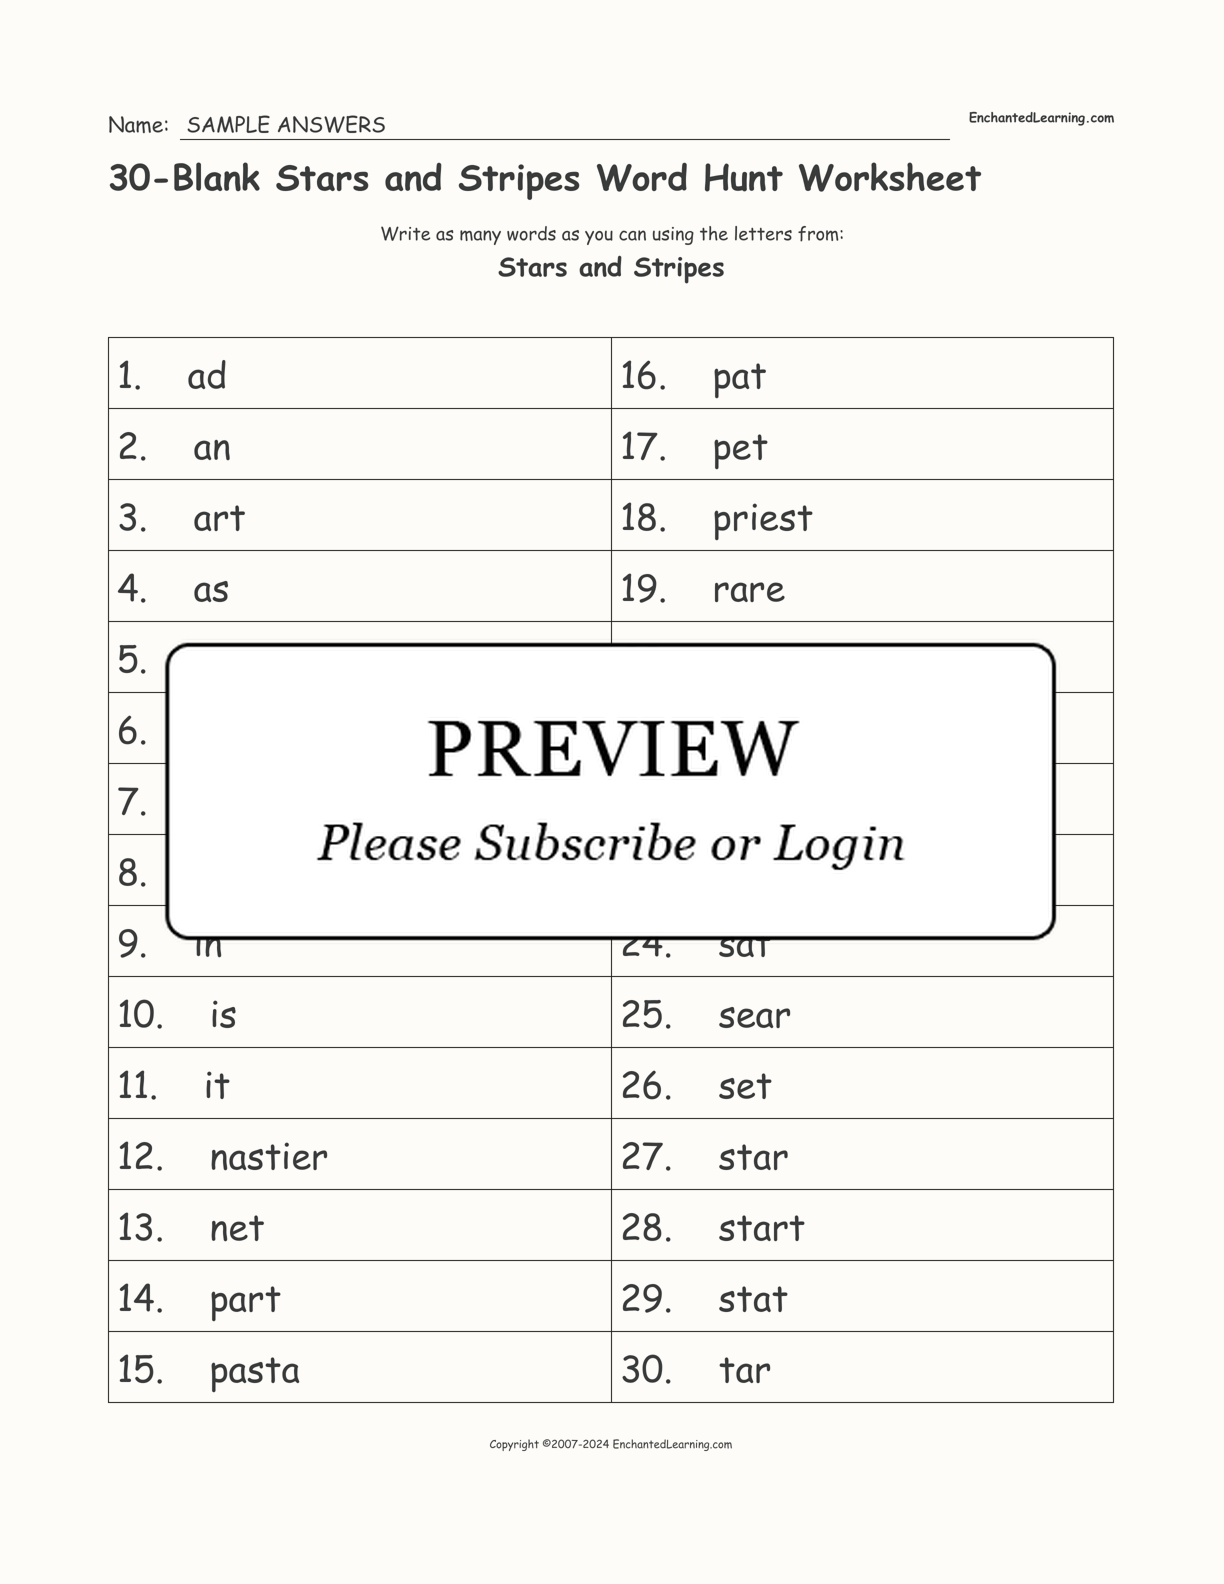 30-Blank Stars and Stripes Word Hunt Worksheet interactive worksheet page 2